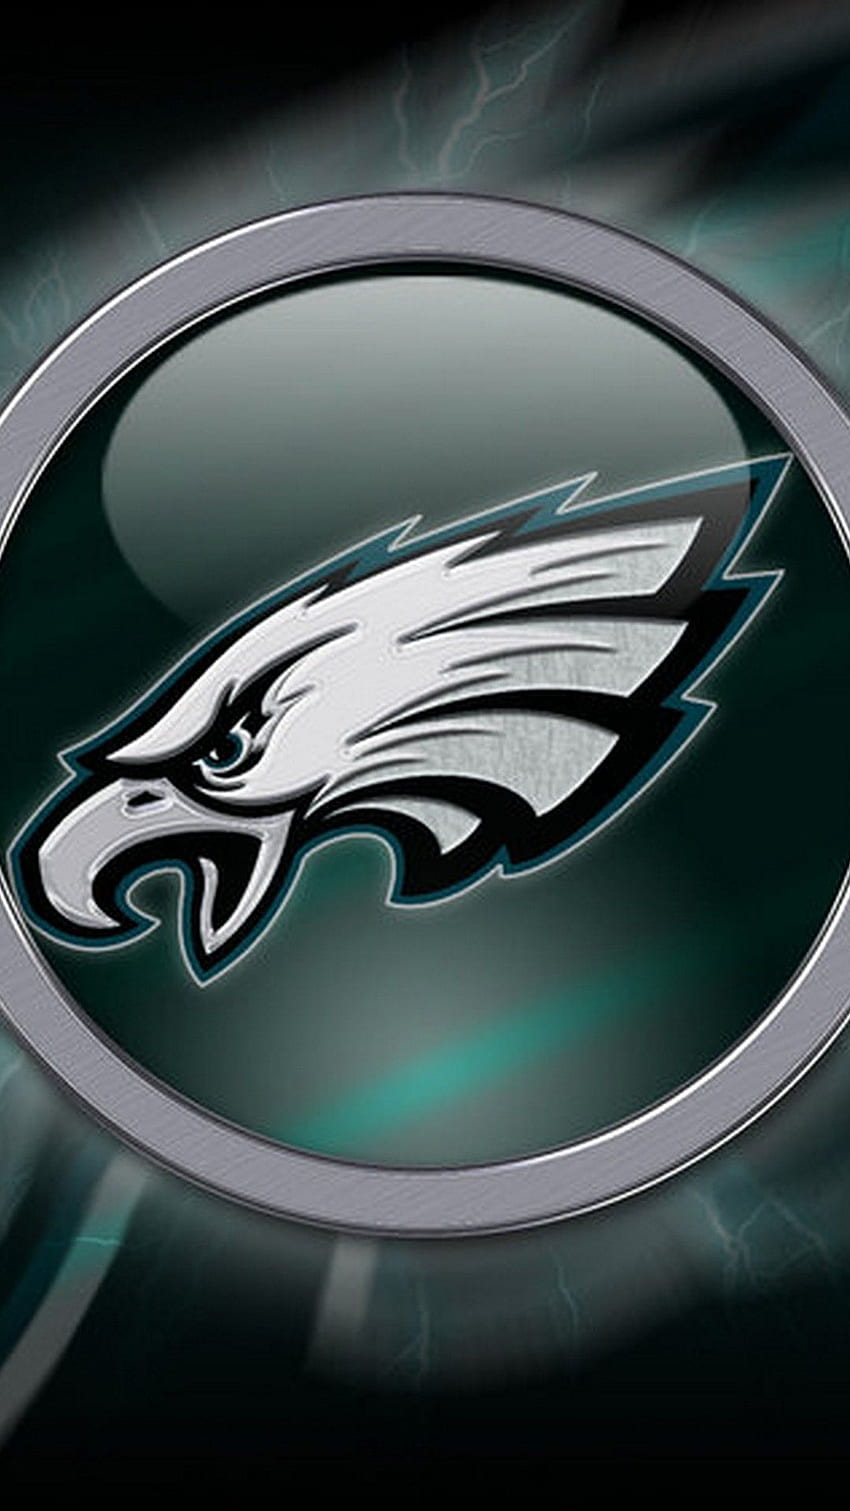 Philadelphia Eagles Wallpapers  Top 25 Best Philadelphia Eagles Backgrounds  Download